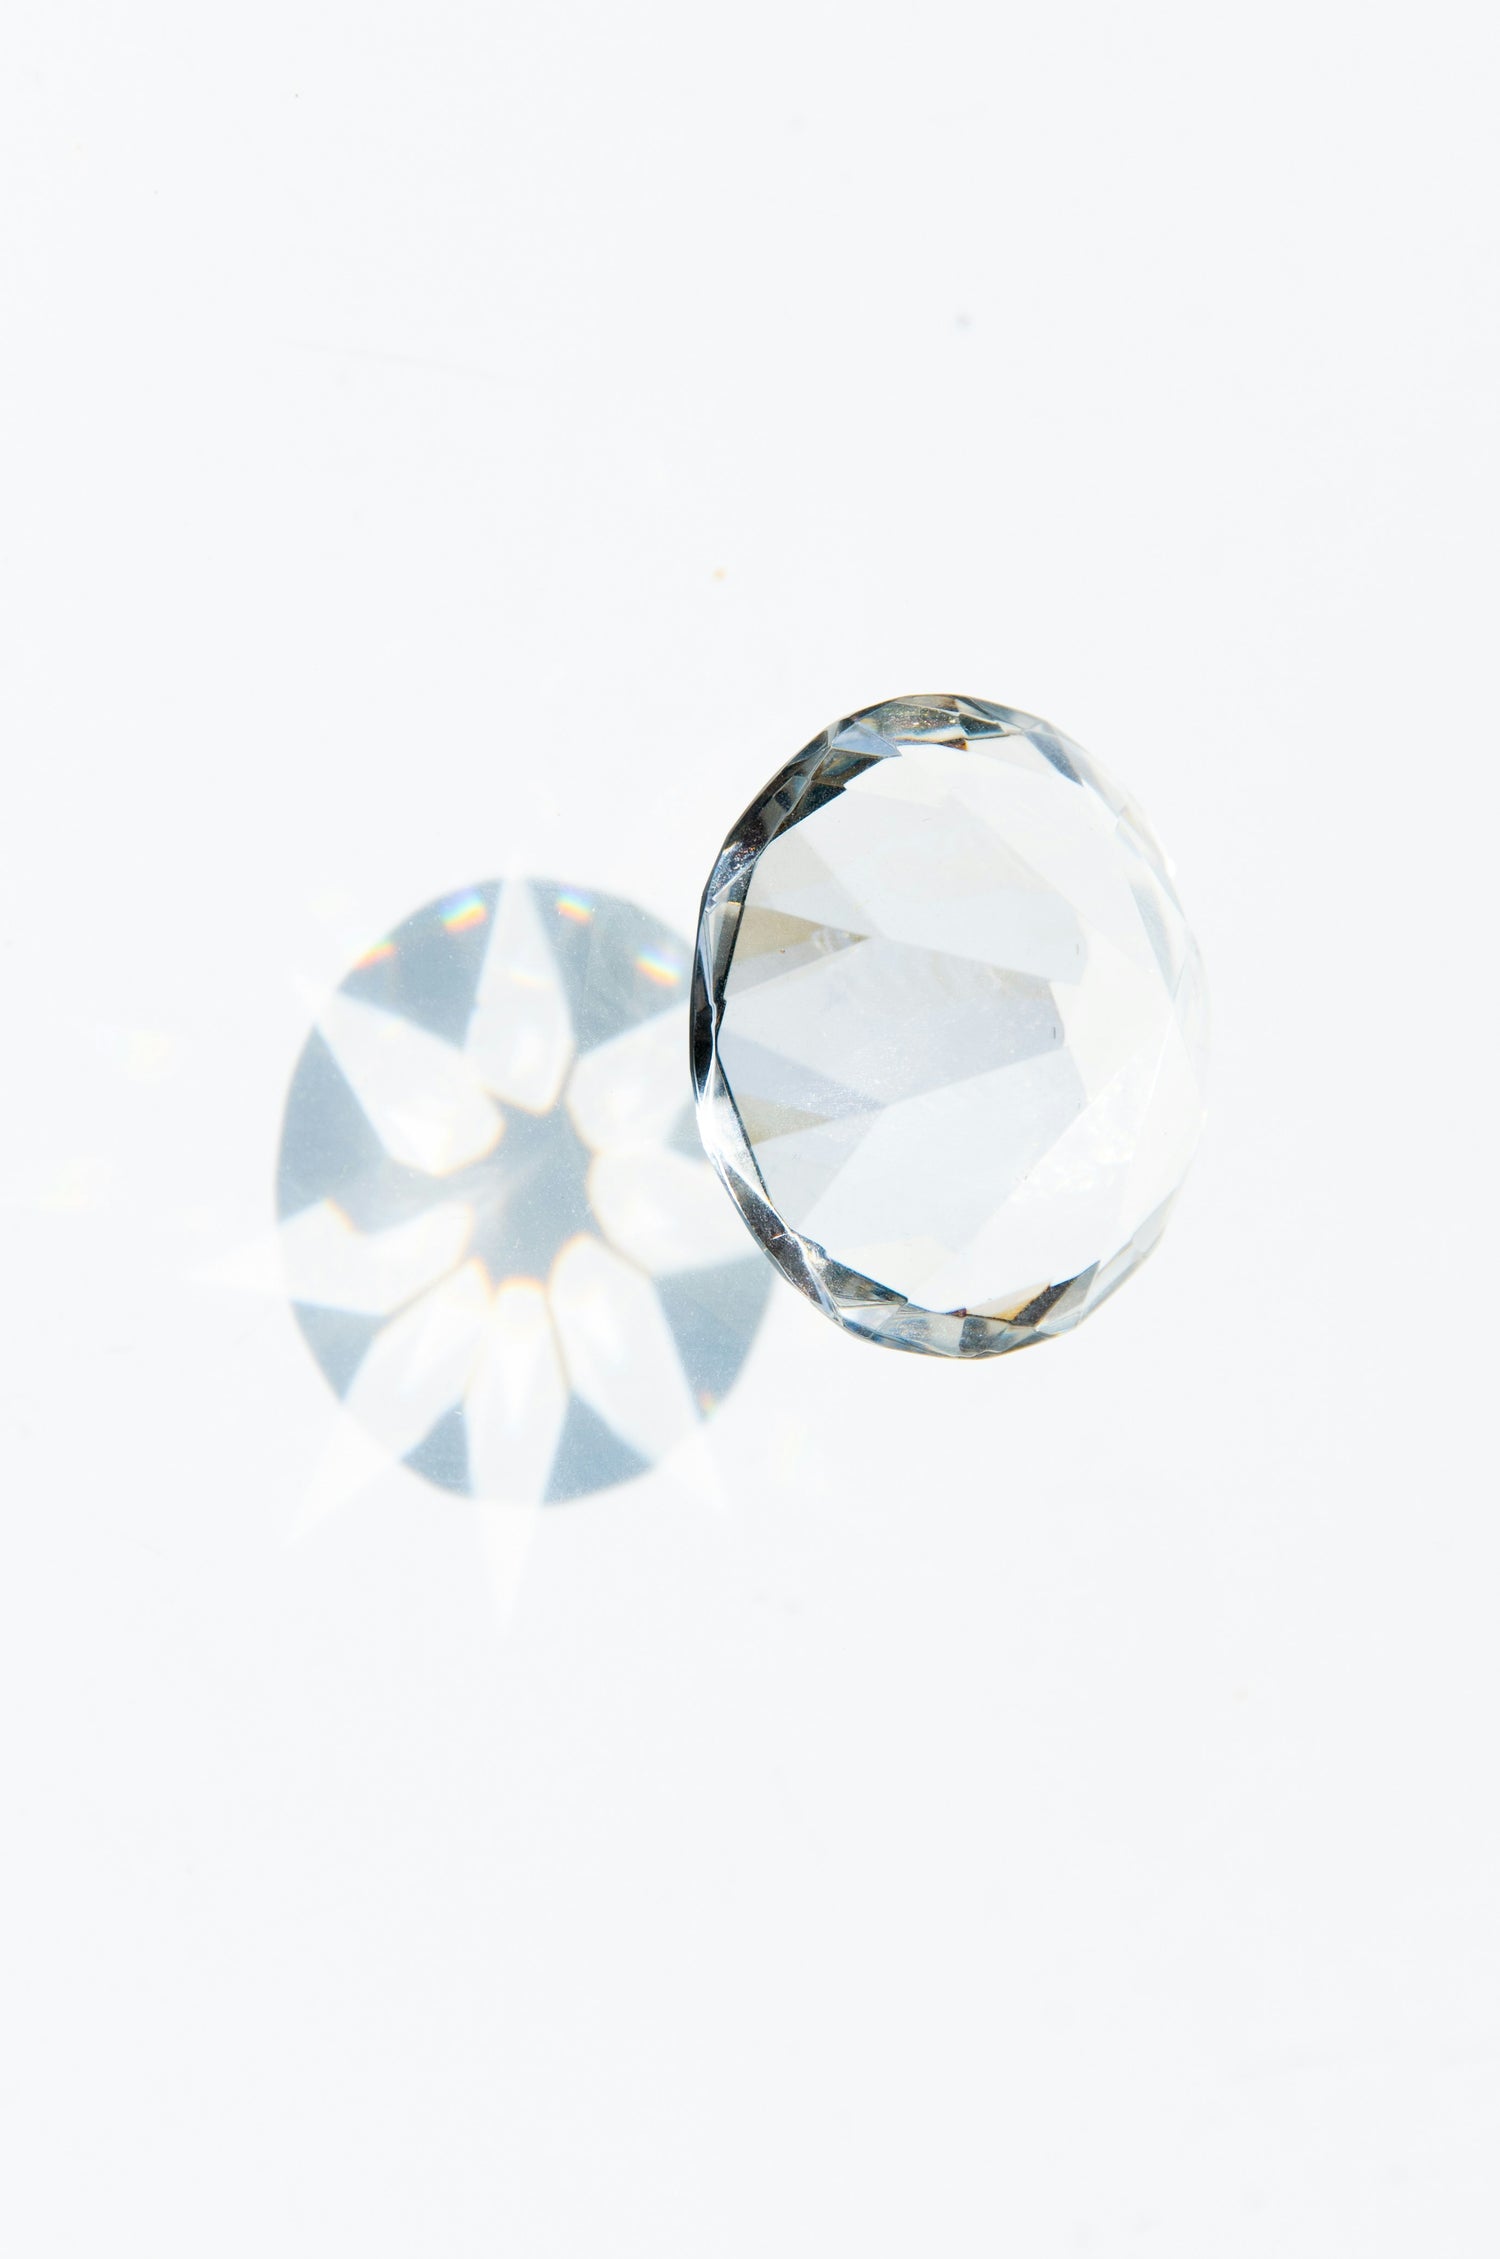 Diamond and its reflection